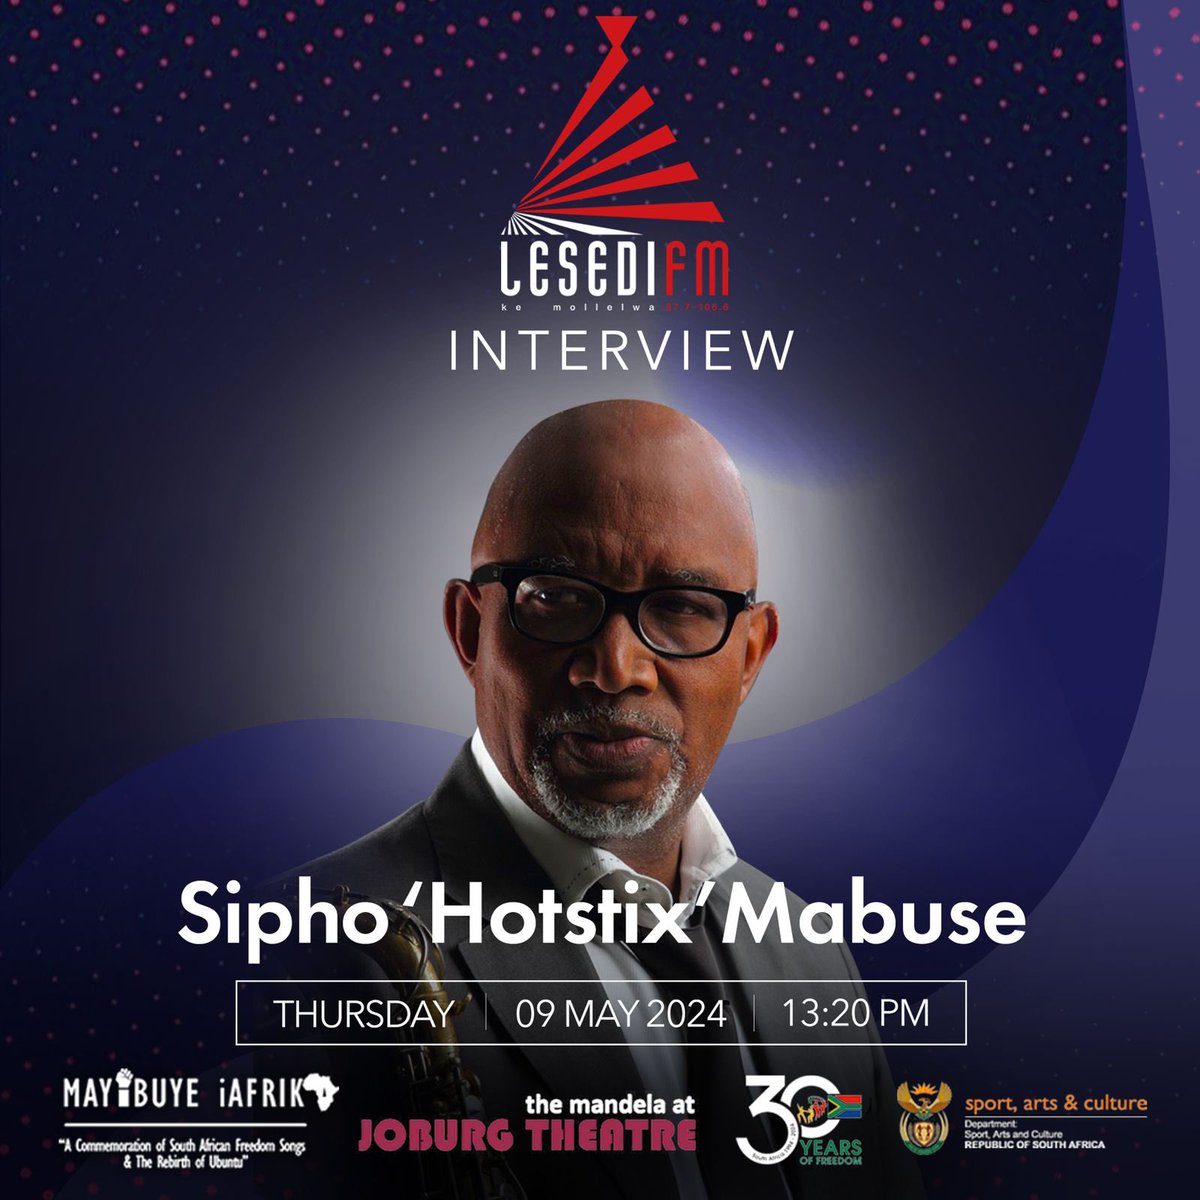 Catch Sipho “Hotstix” Mabuse on Lesedi FM @LesediFM talking about the Mayibuye iAfrika Concert 24 & 25 May @joburgtheatre @siphohotstix